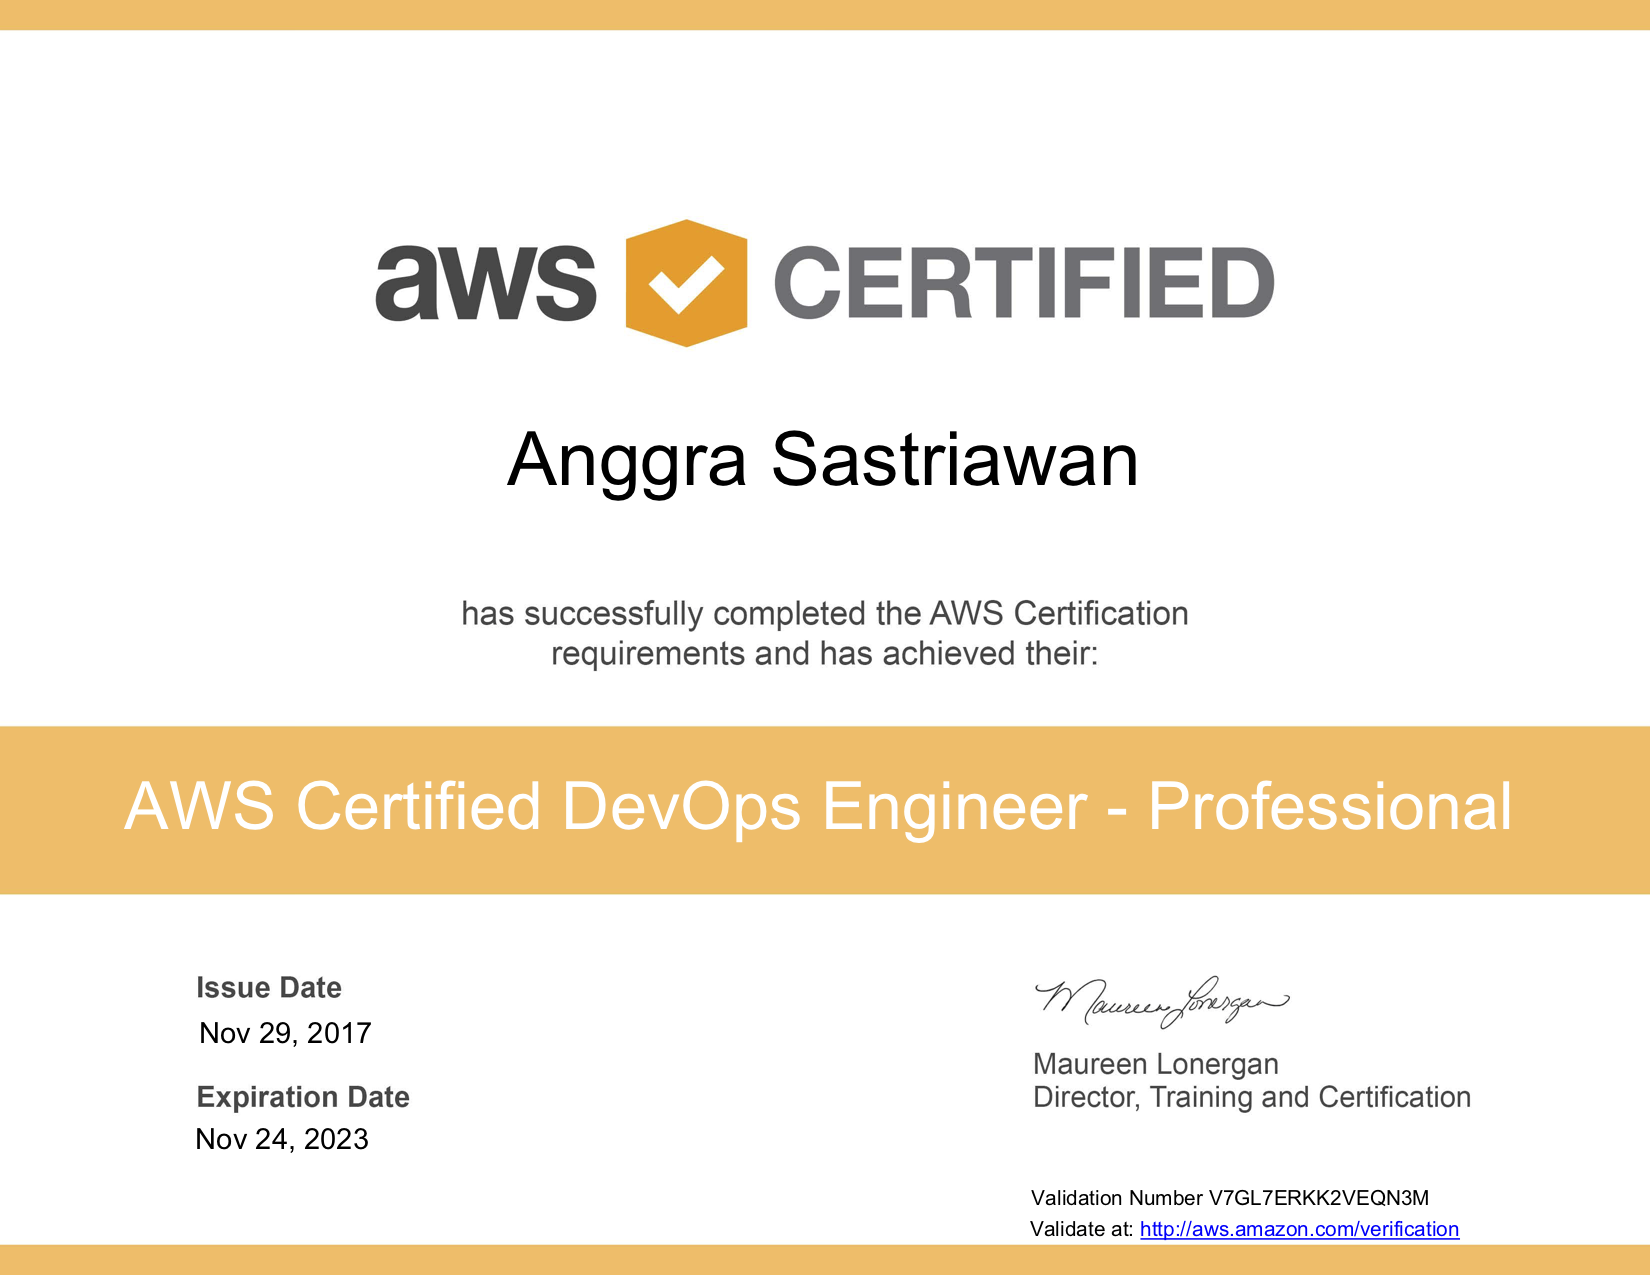 Anggra's AWS Certified DevOps Engineer - Professional certificate